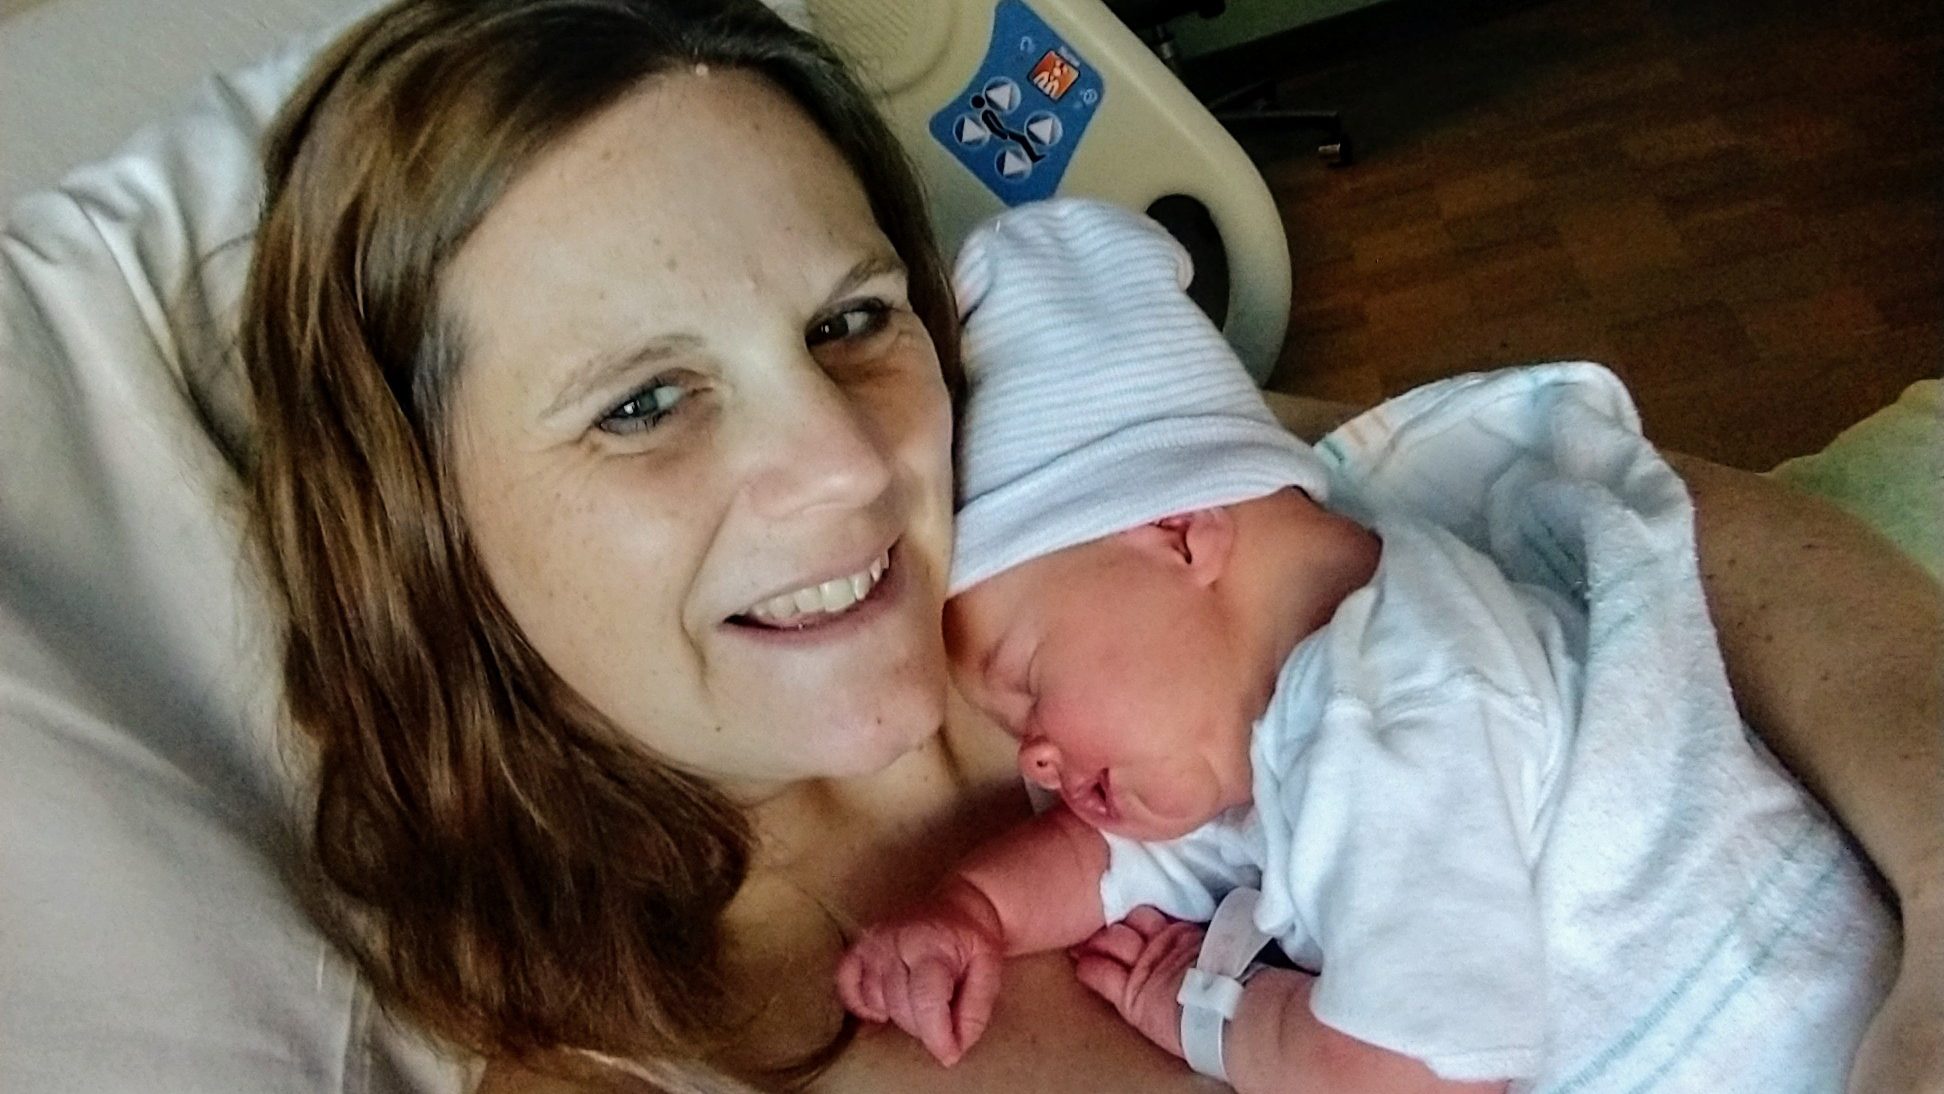 Lymphoma survivor Krista Lusby holding her newborn daughter Morgan in the hospital